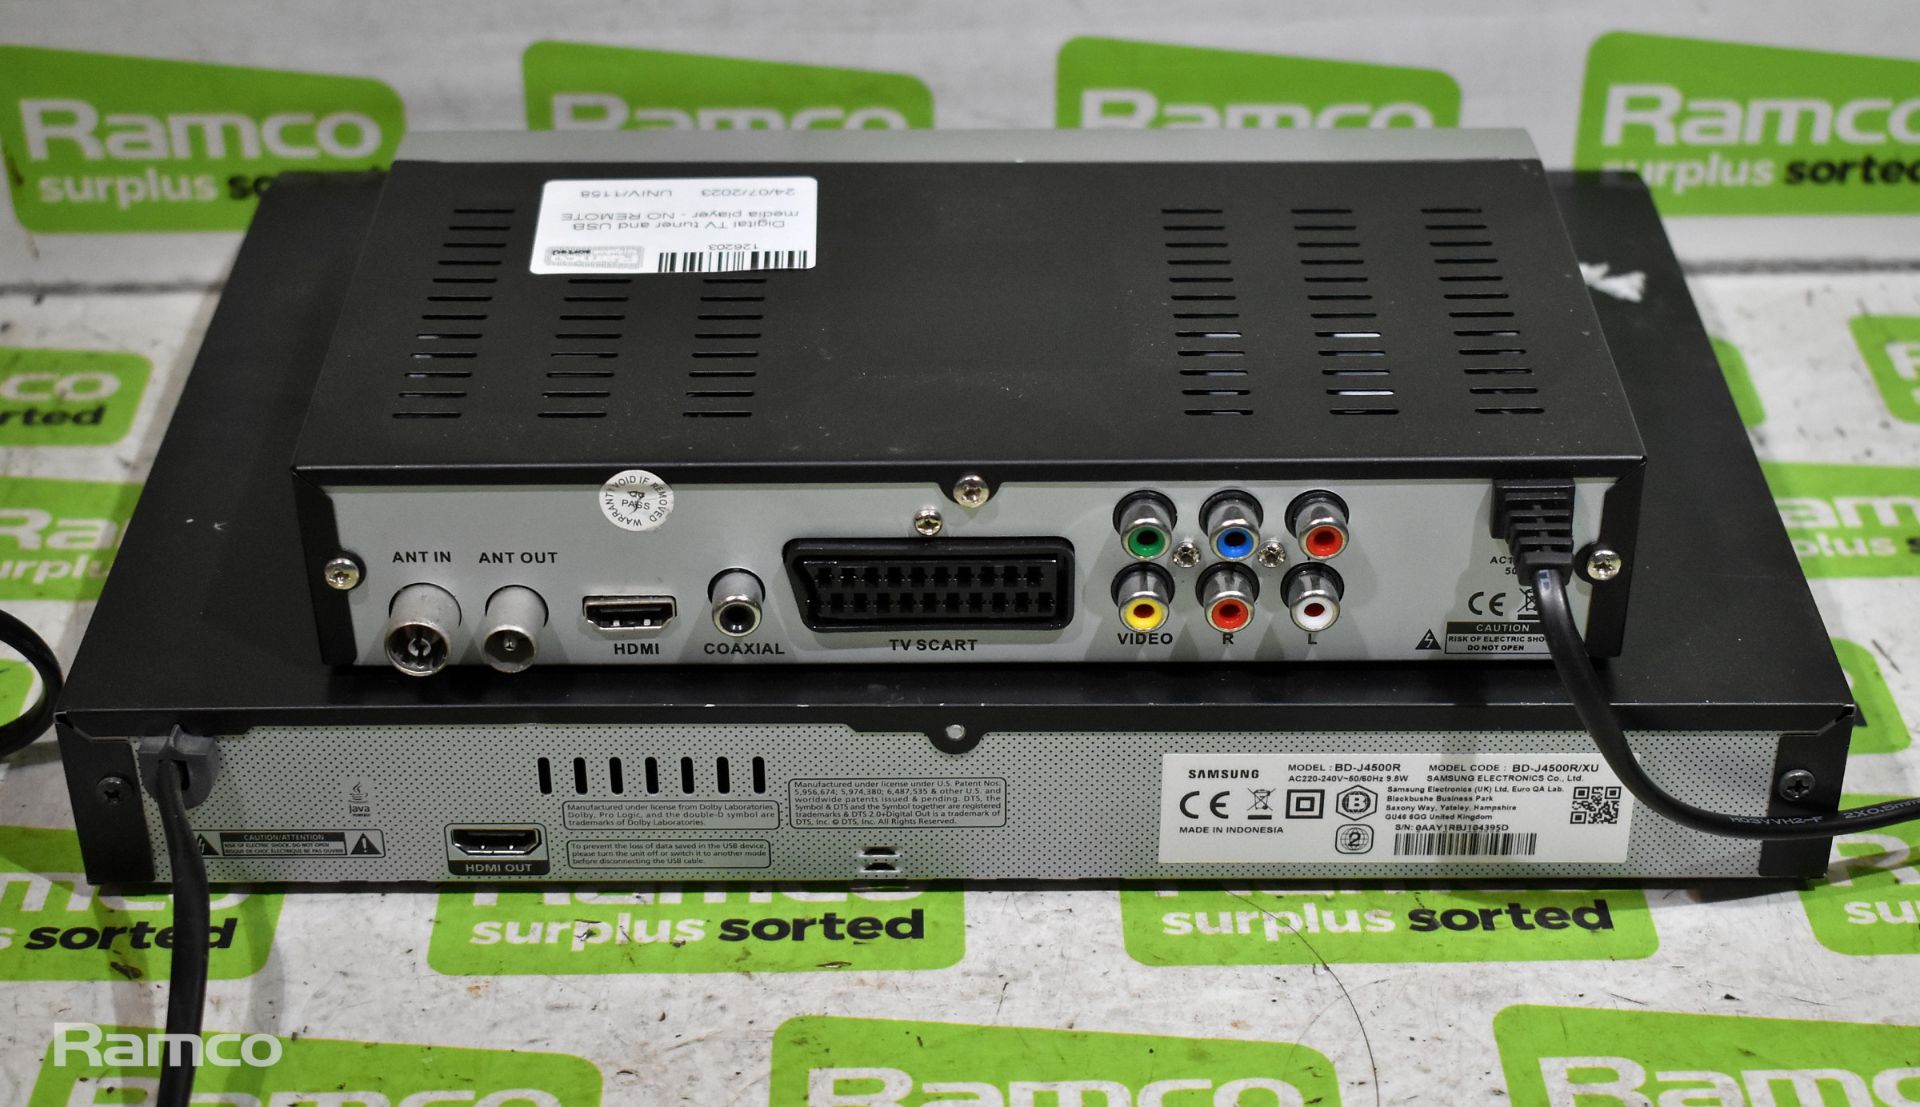 Digital TV tuner and USB media player - NO REMOTE, Samsung BD-J4500R blu ray player - NO REMOTE - Image 3 of 4